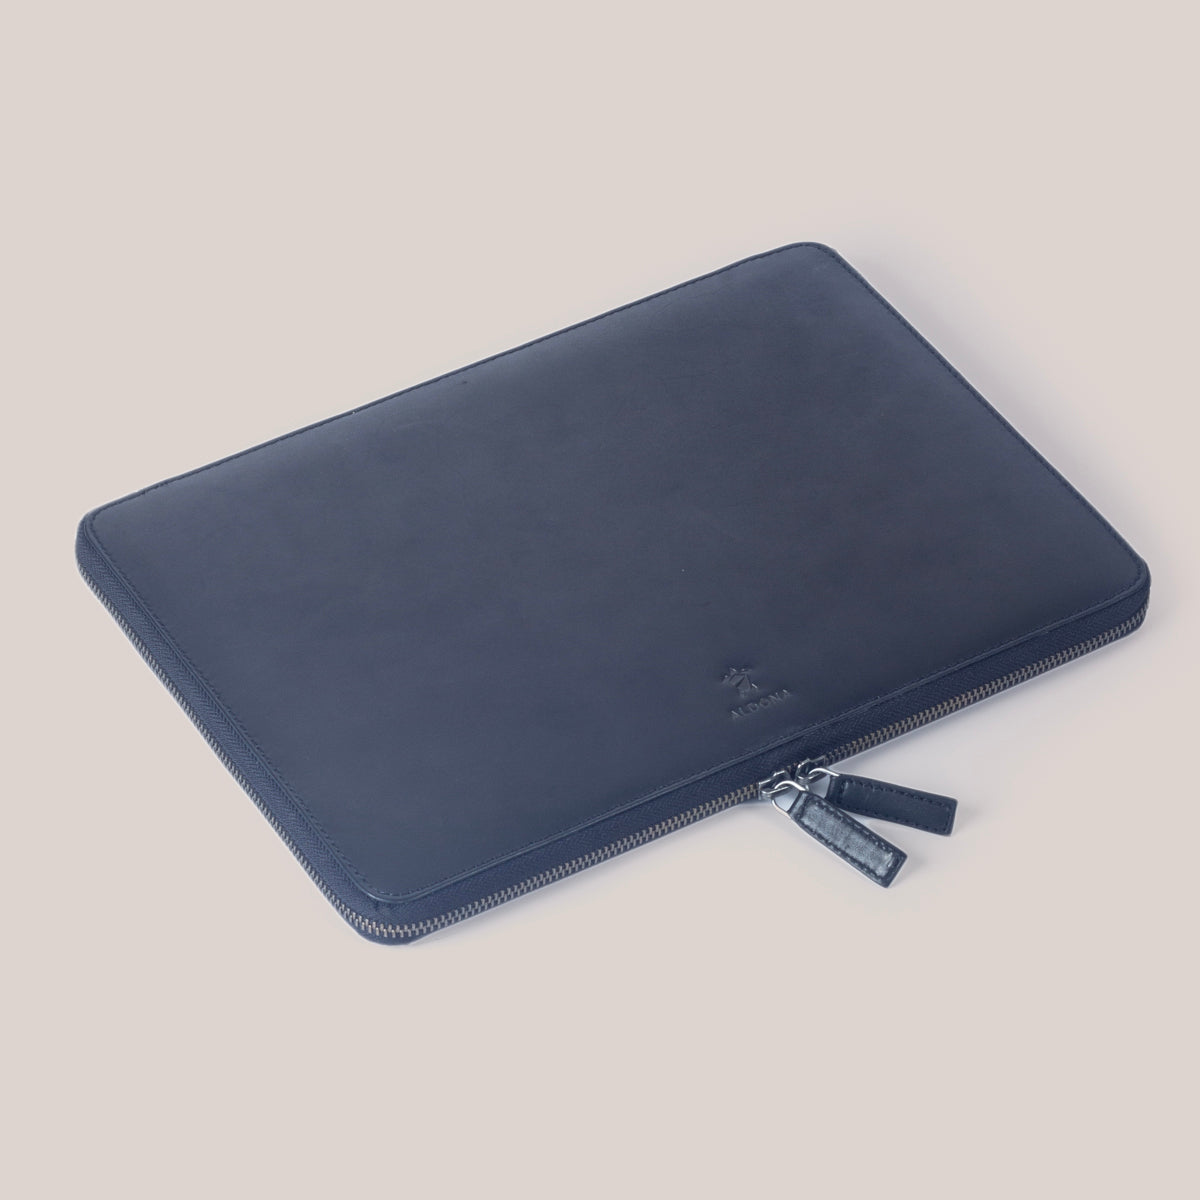 Full Zippered Laptop Case - Onyx Black